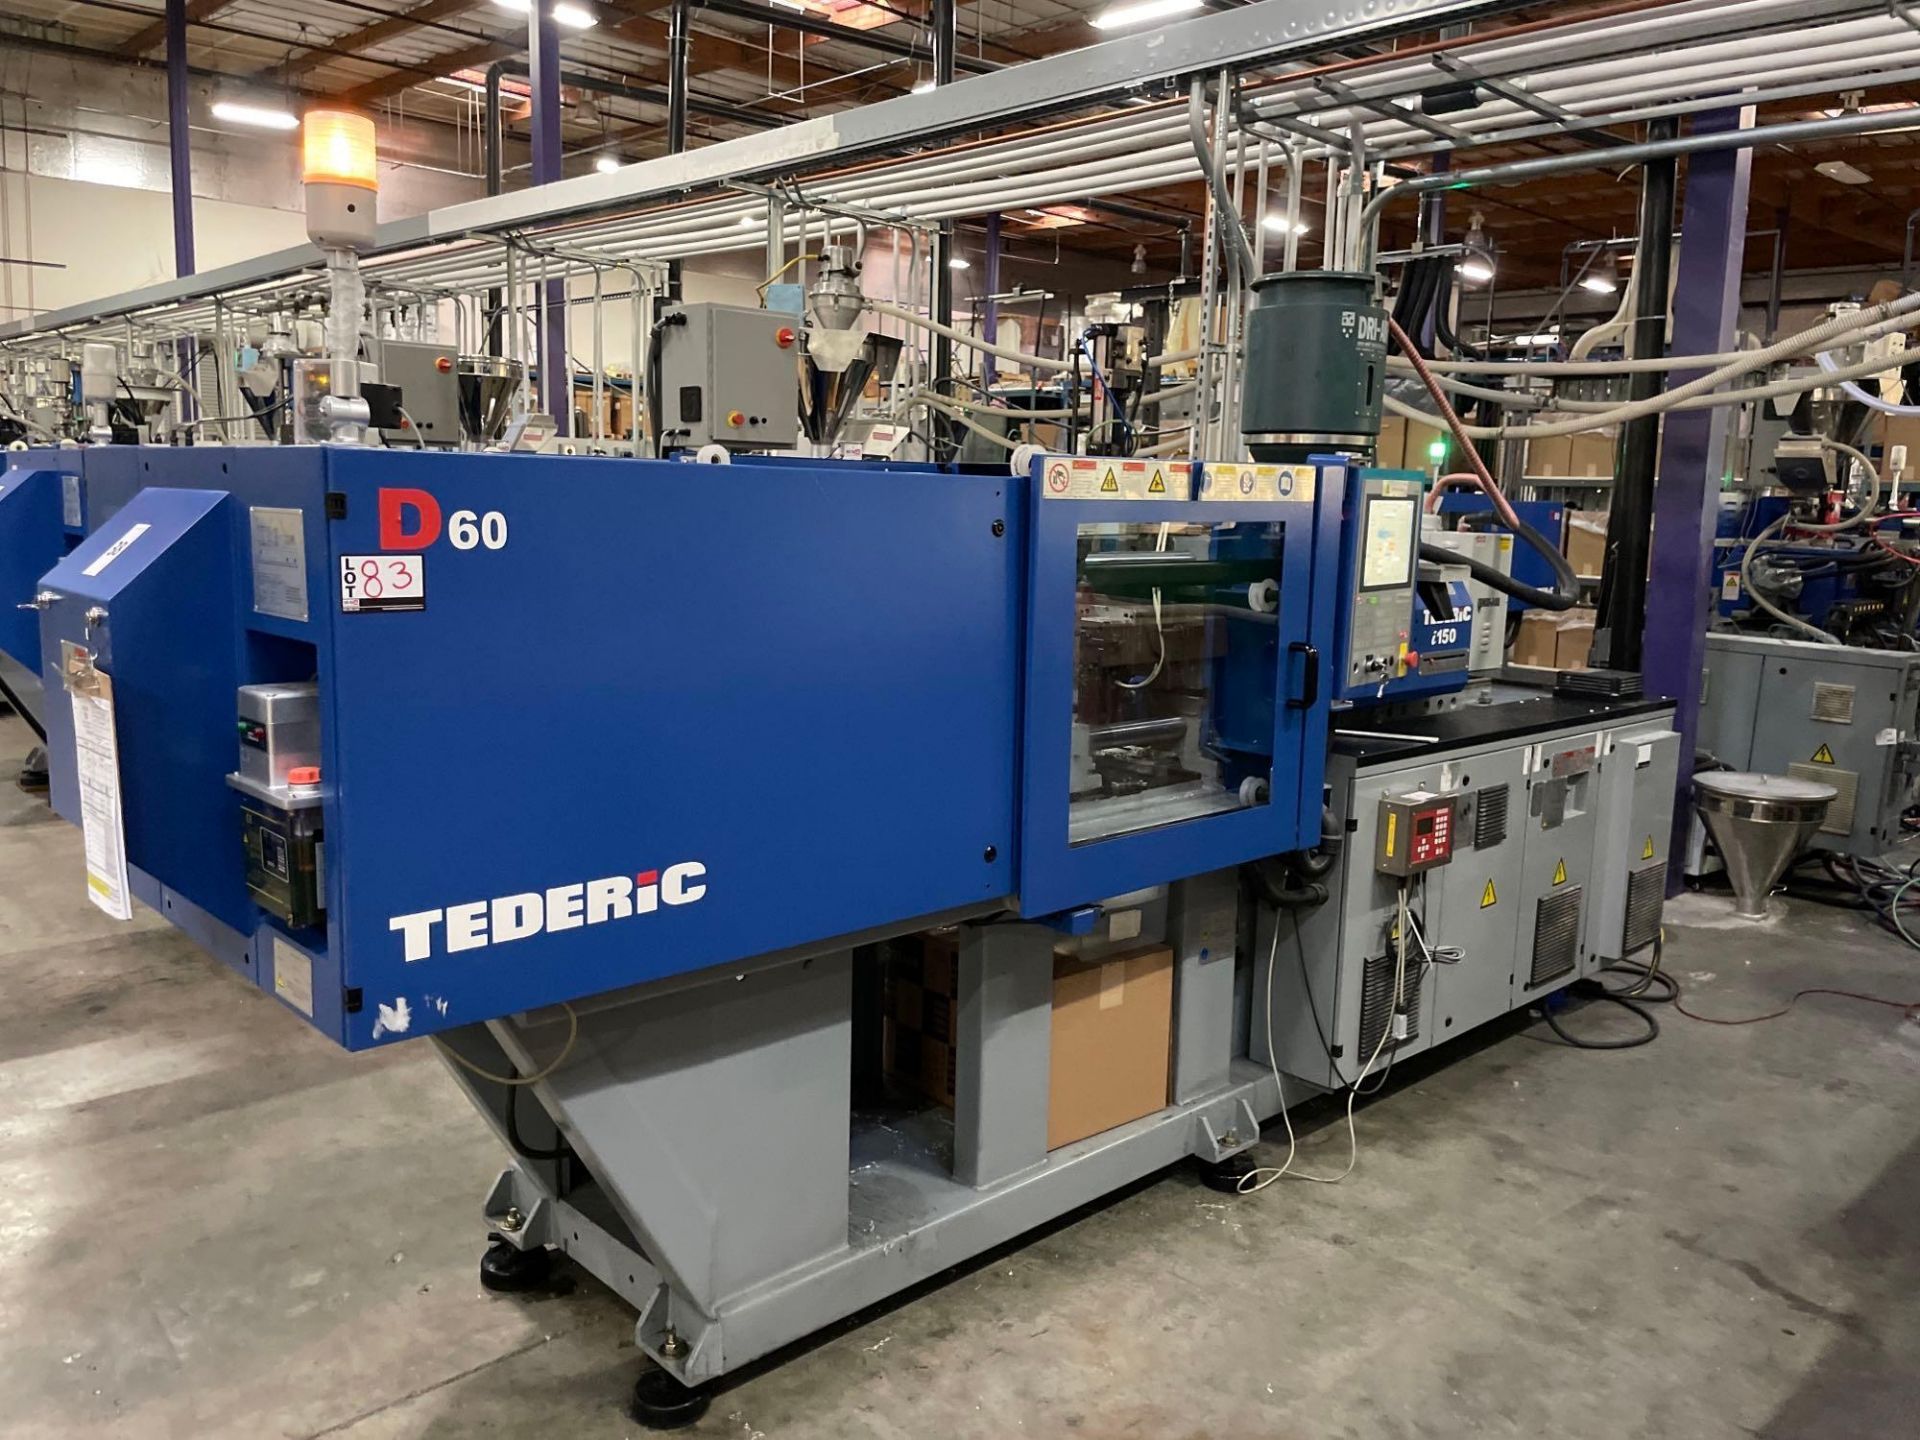 66 Ton Tederic D60 Plastic Injection Molder, Keba 12000, s/n T00800241, New 2019 - Image 5 of 11